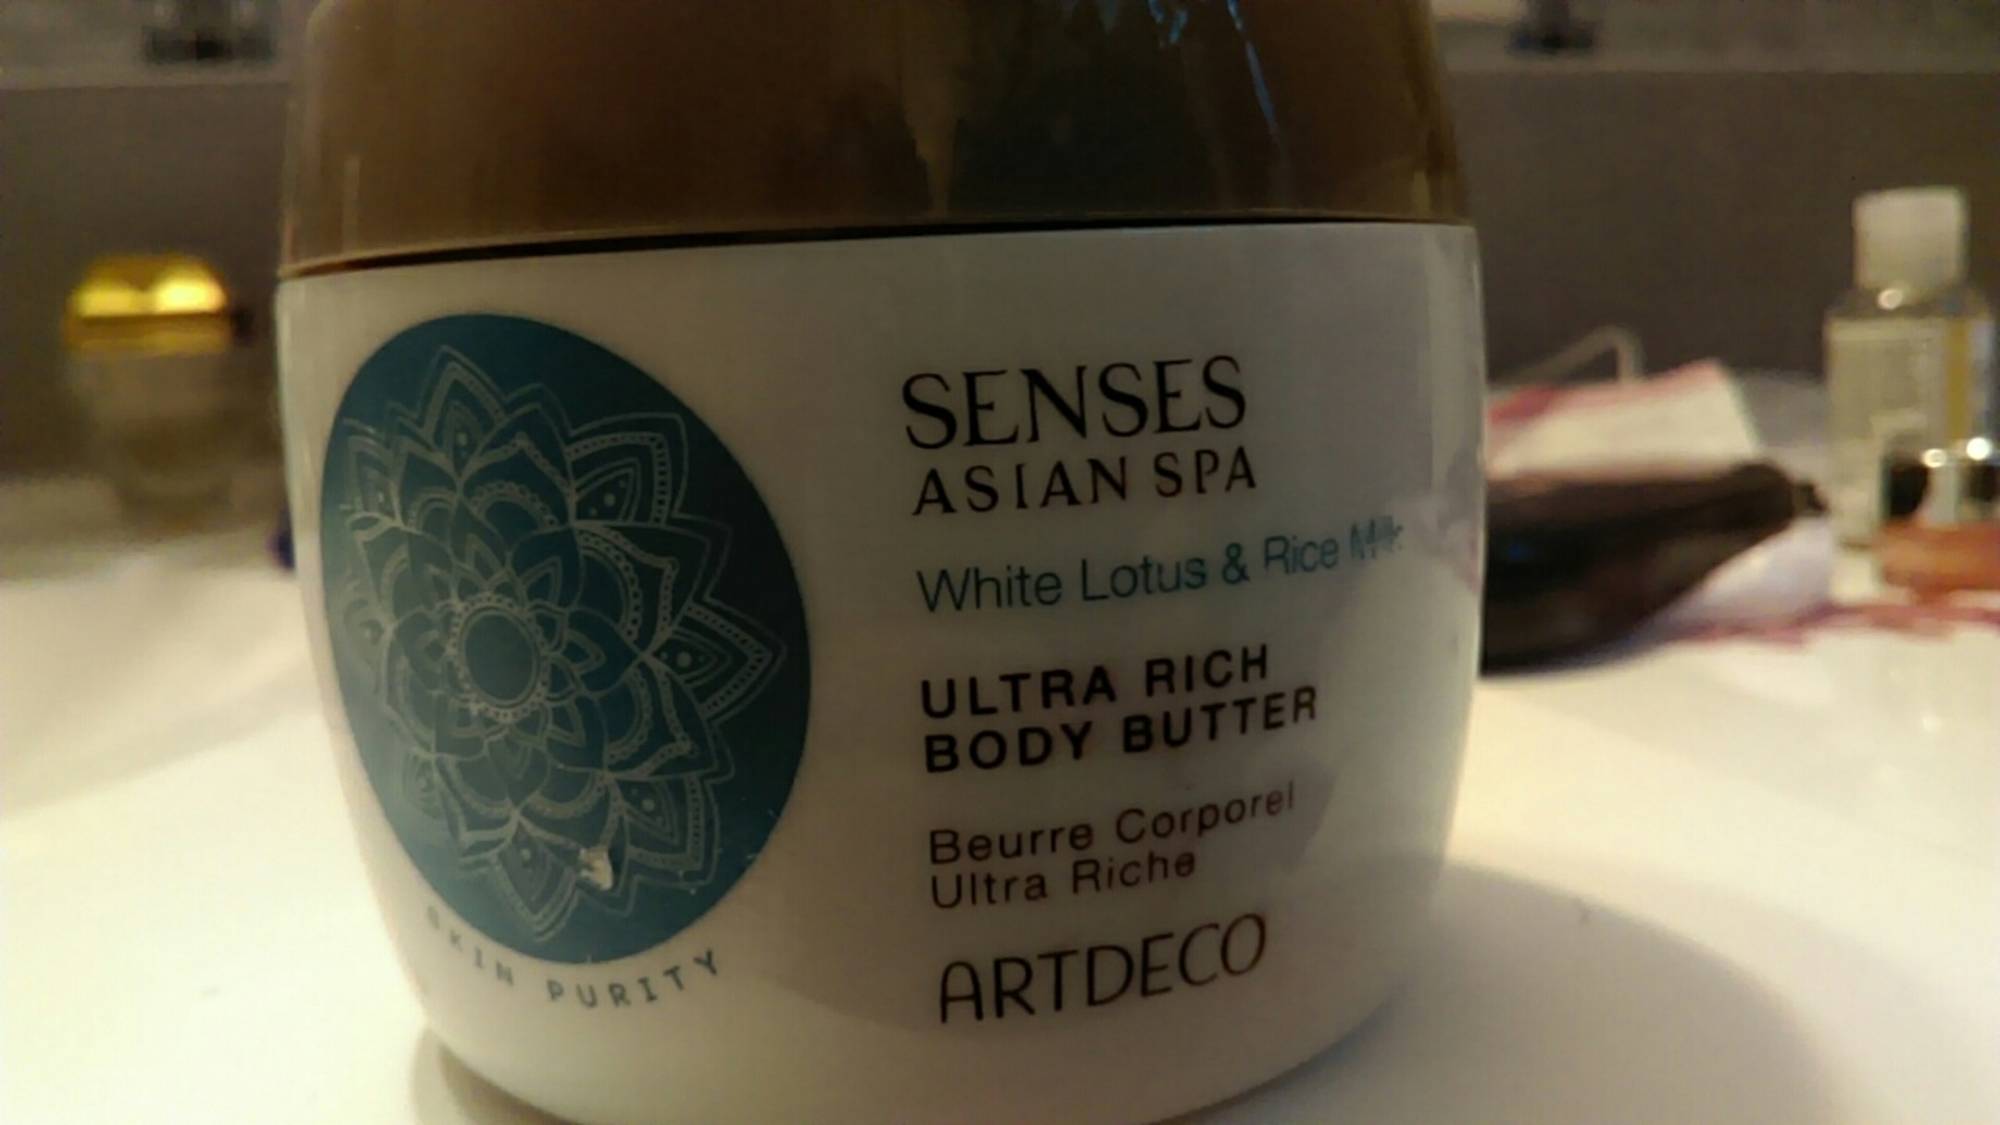 ARTDECO - Asian spa skin purity - Beurre corporel ultra riche